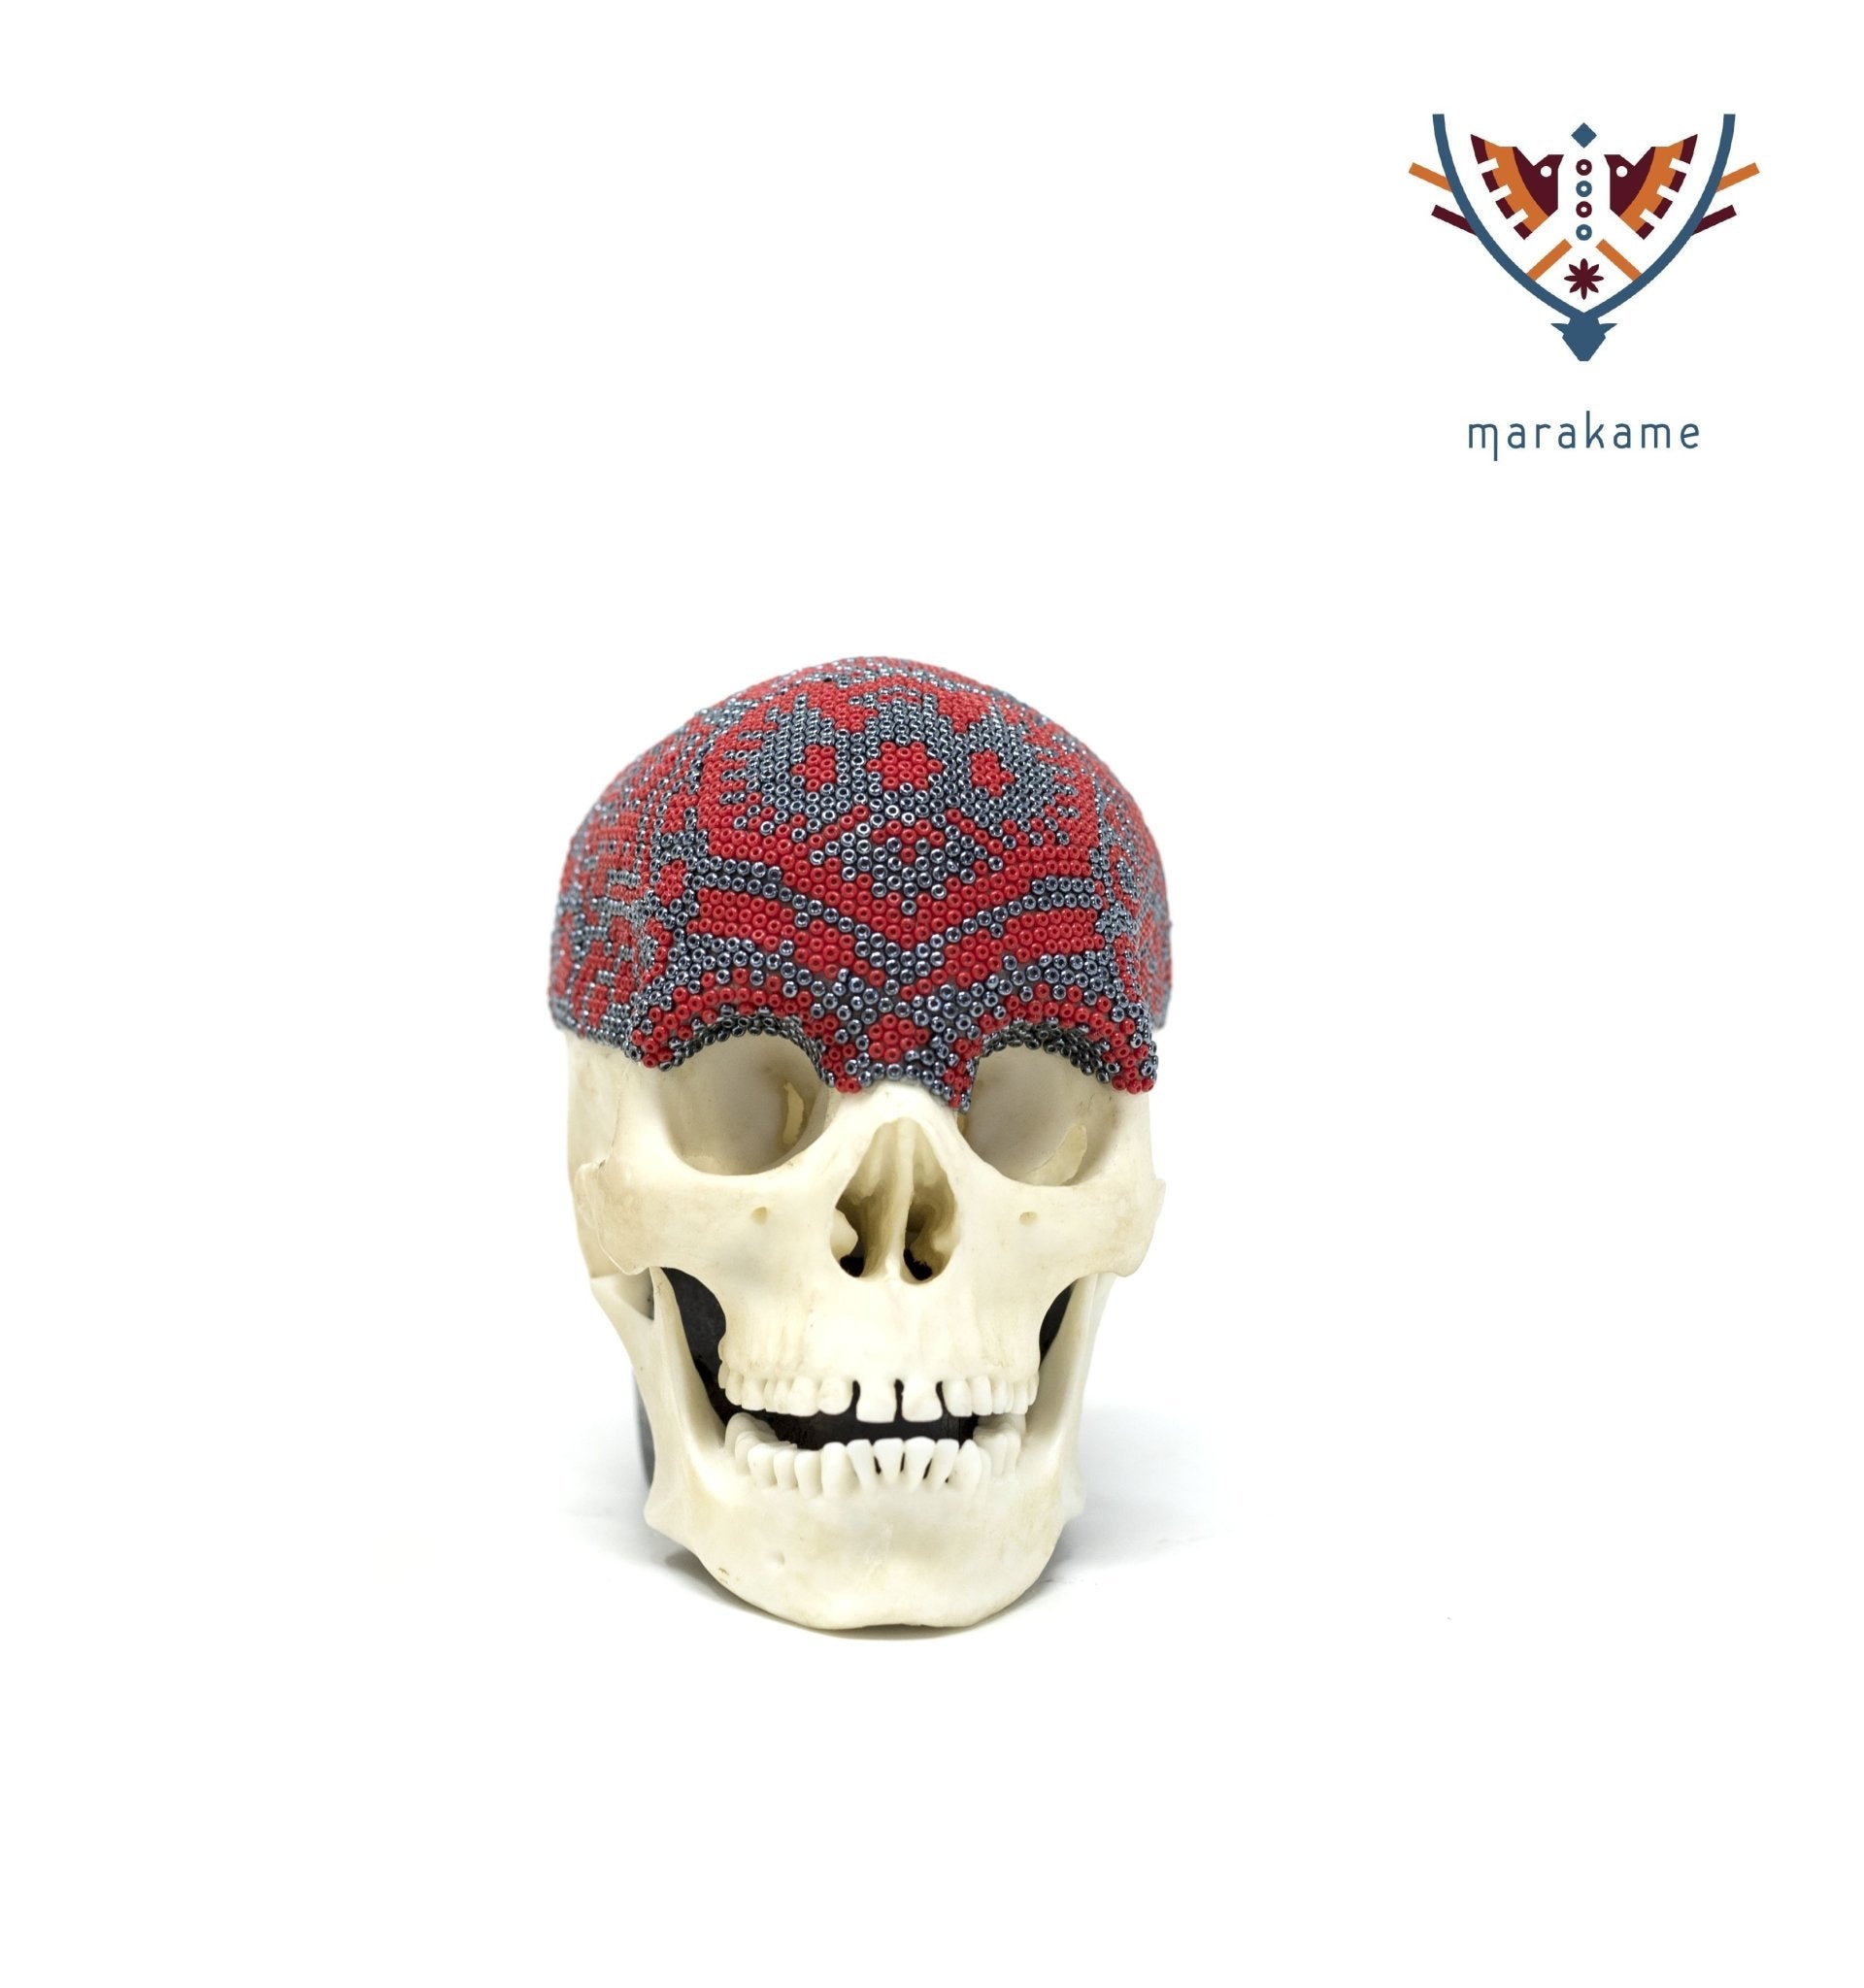 Cráneo Hiperrealista de Humano escala: "Mukiyari I" - Arte Huichol - Marakame